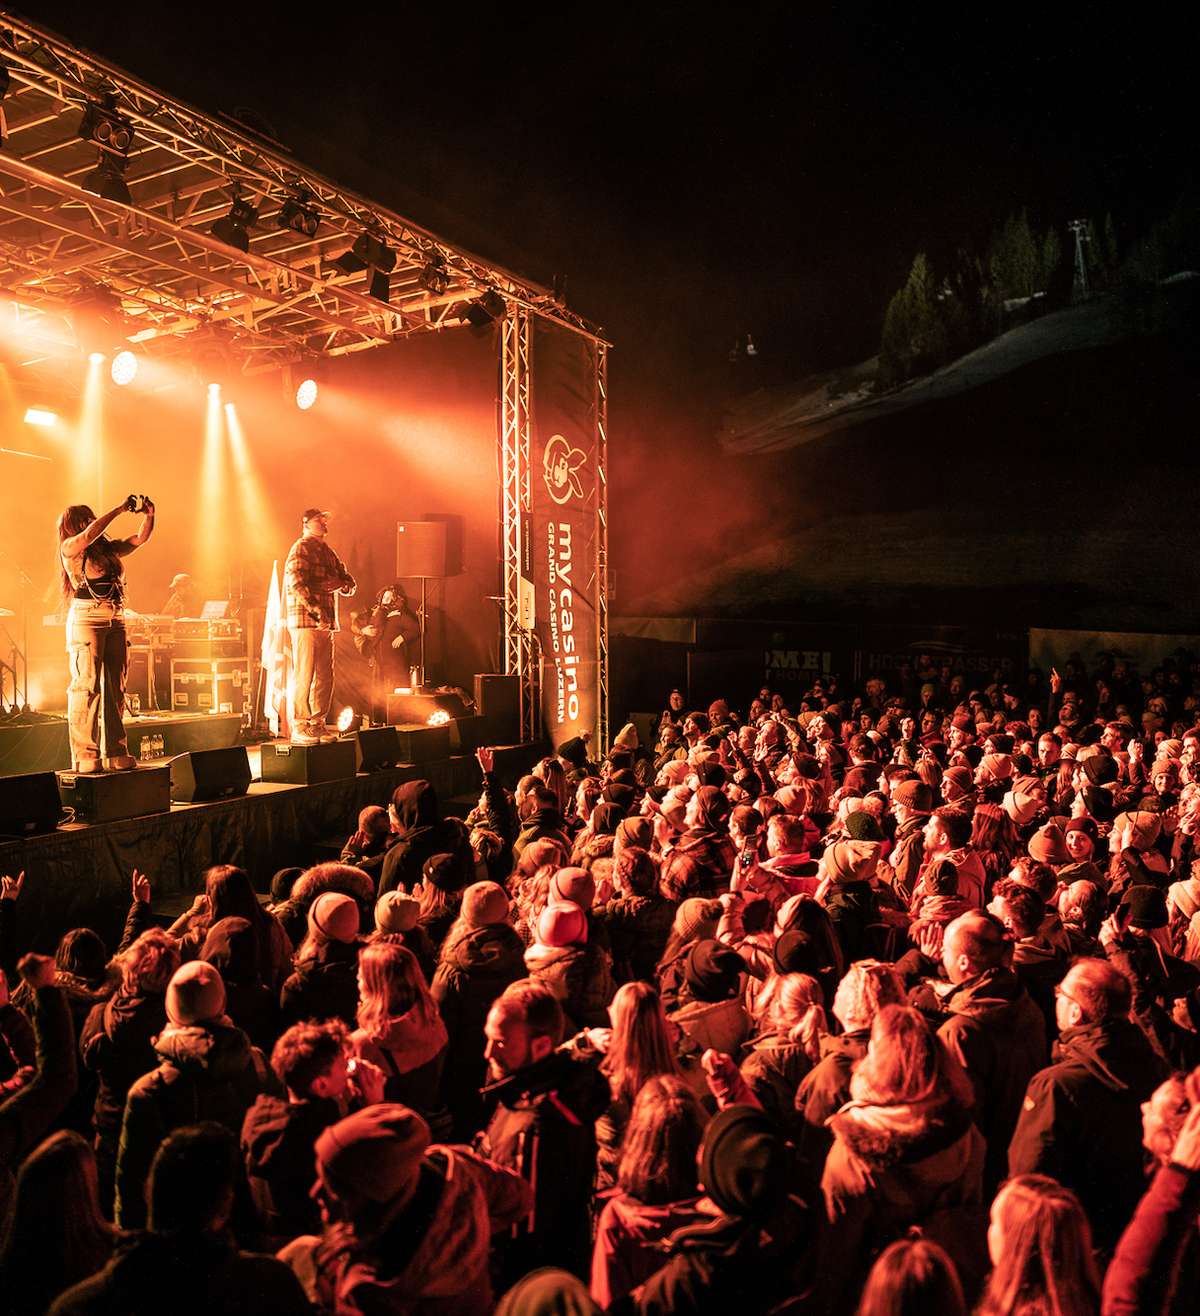 Musikfestival auf Sörenberg – Betreiber ziehen Fazit